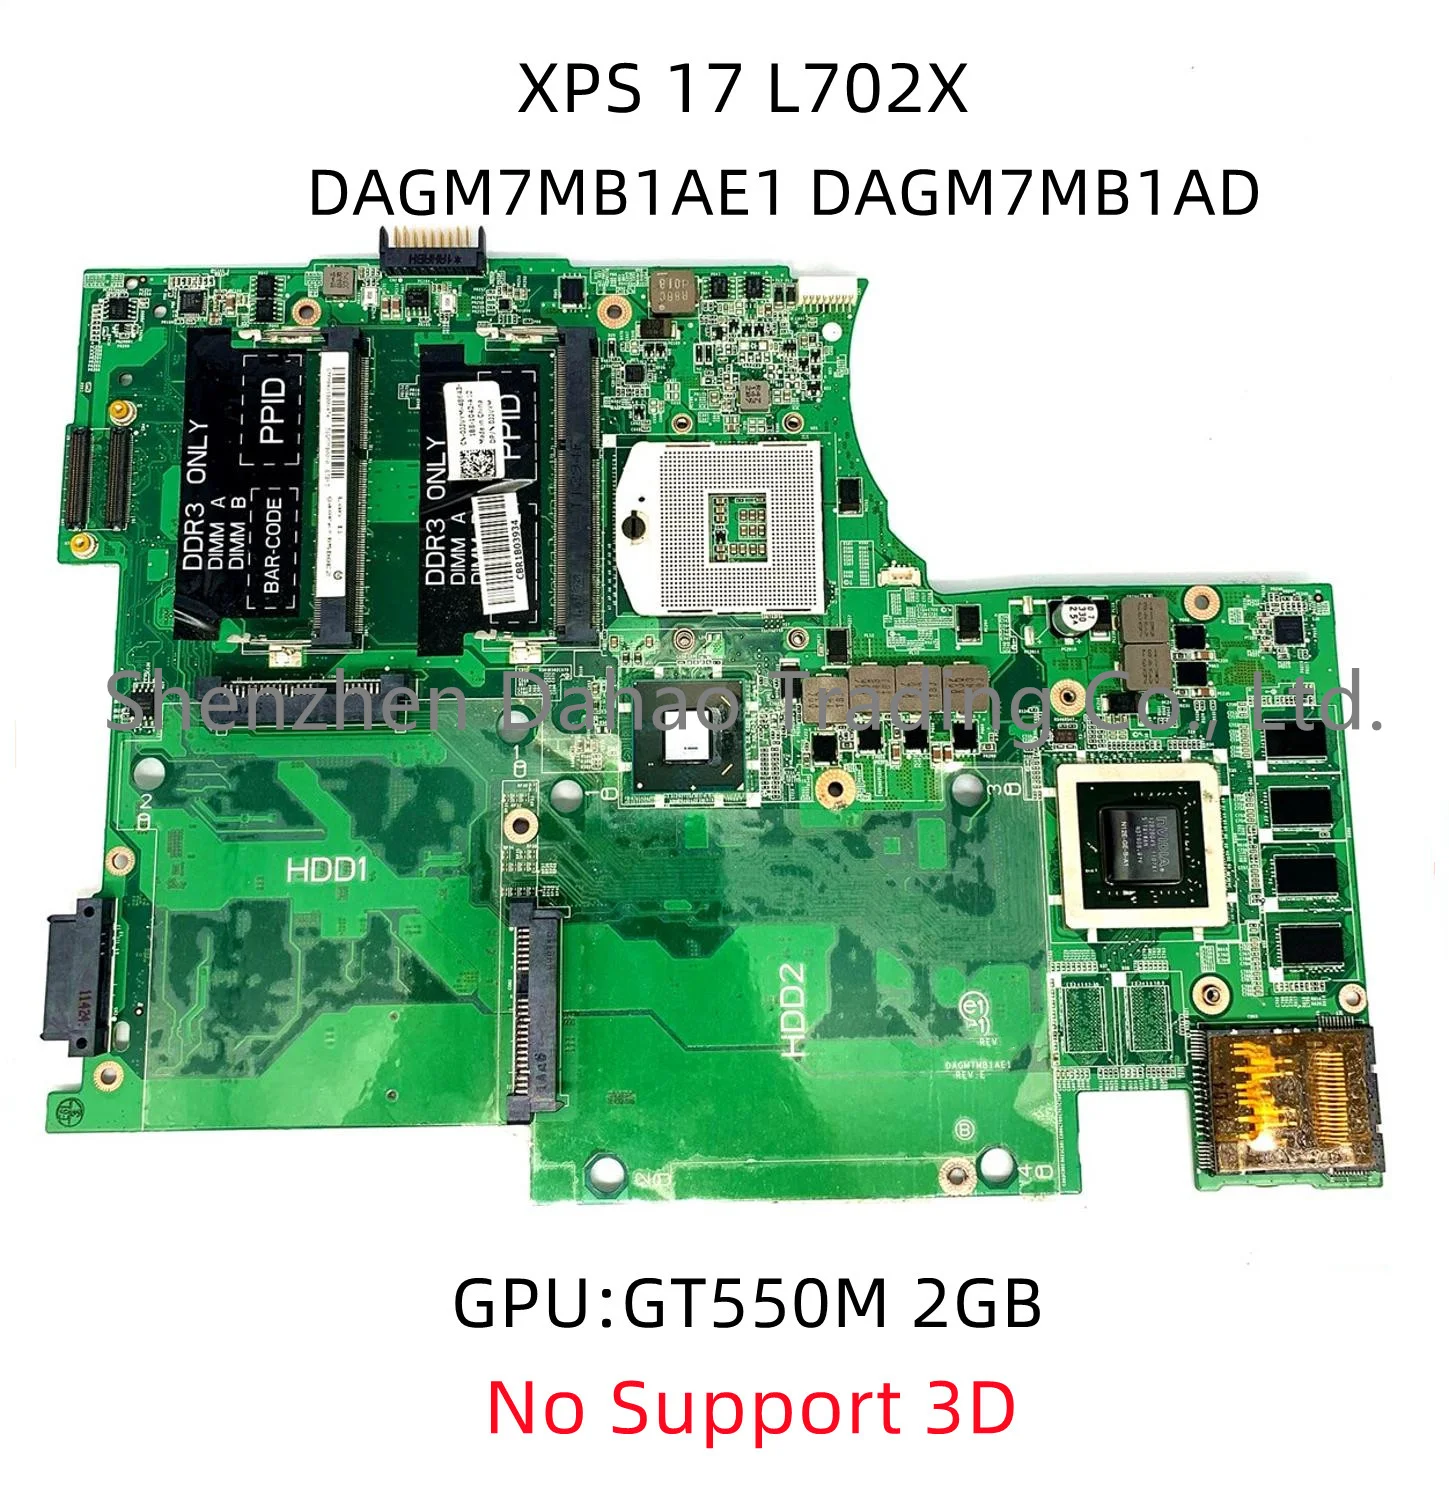 DAGM7MB1AE1 DAGM7MB1AD For DELL XPS 17 L702X Laptop motherboard CN-0JJVYM 0JJVYM With GT550M 2GB-GPU (No Support 3D)